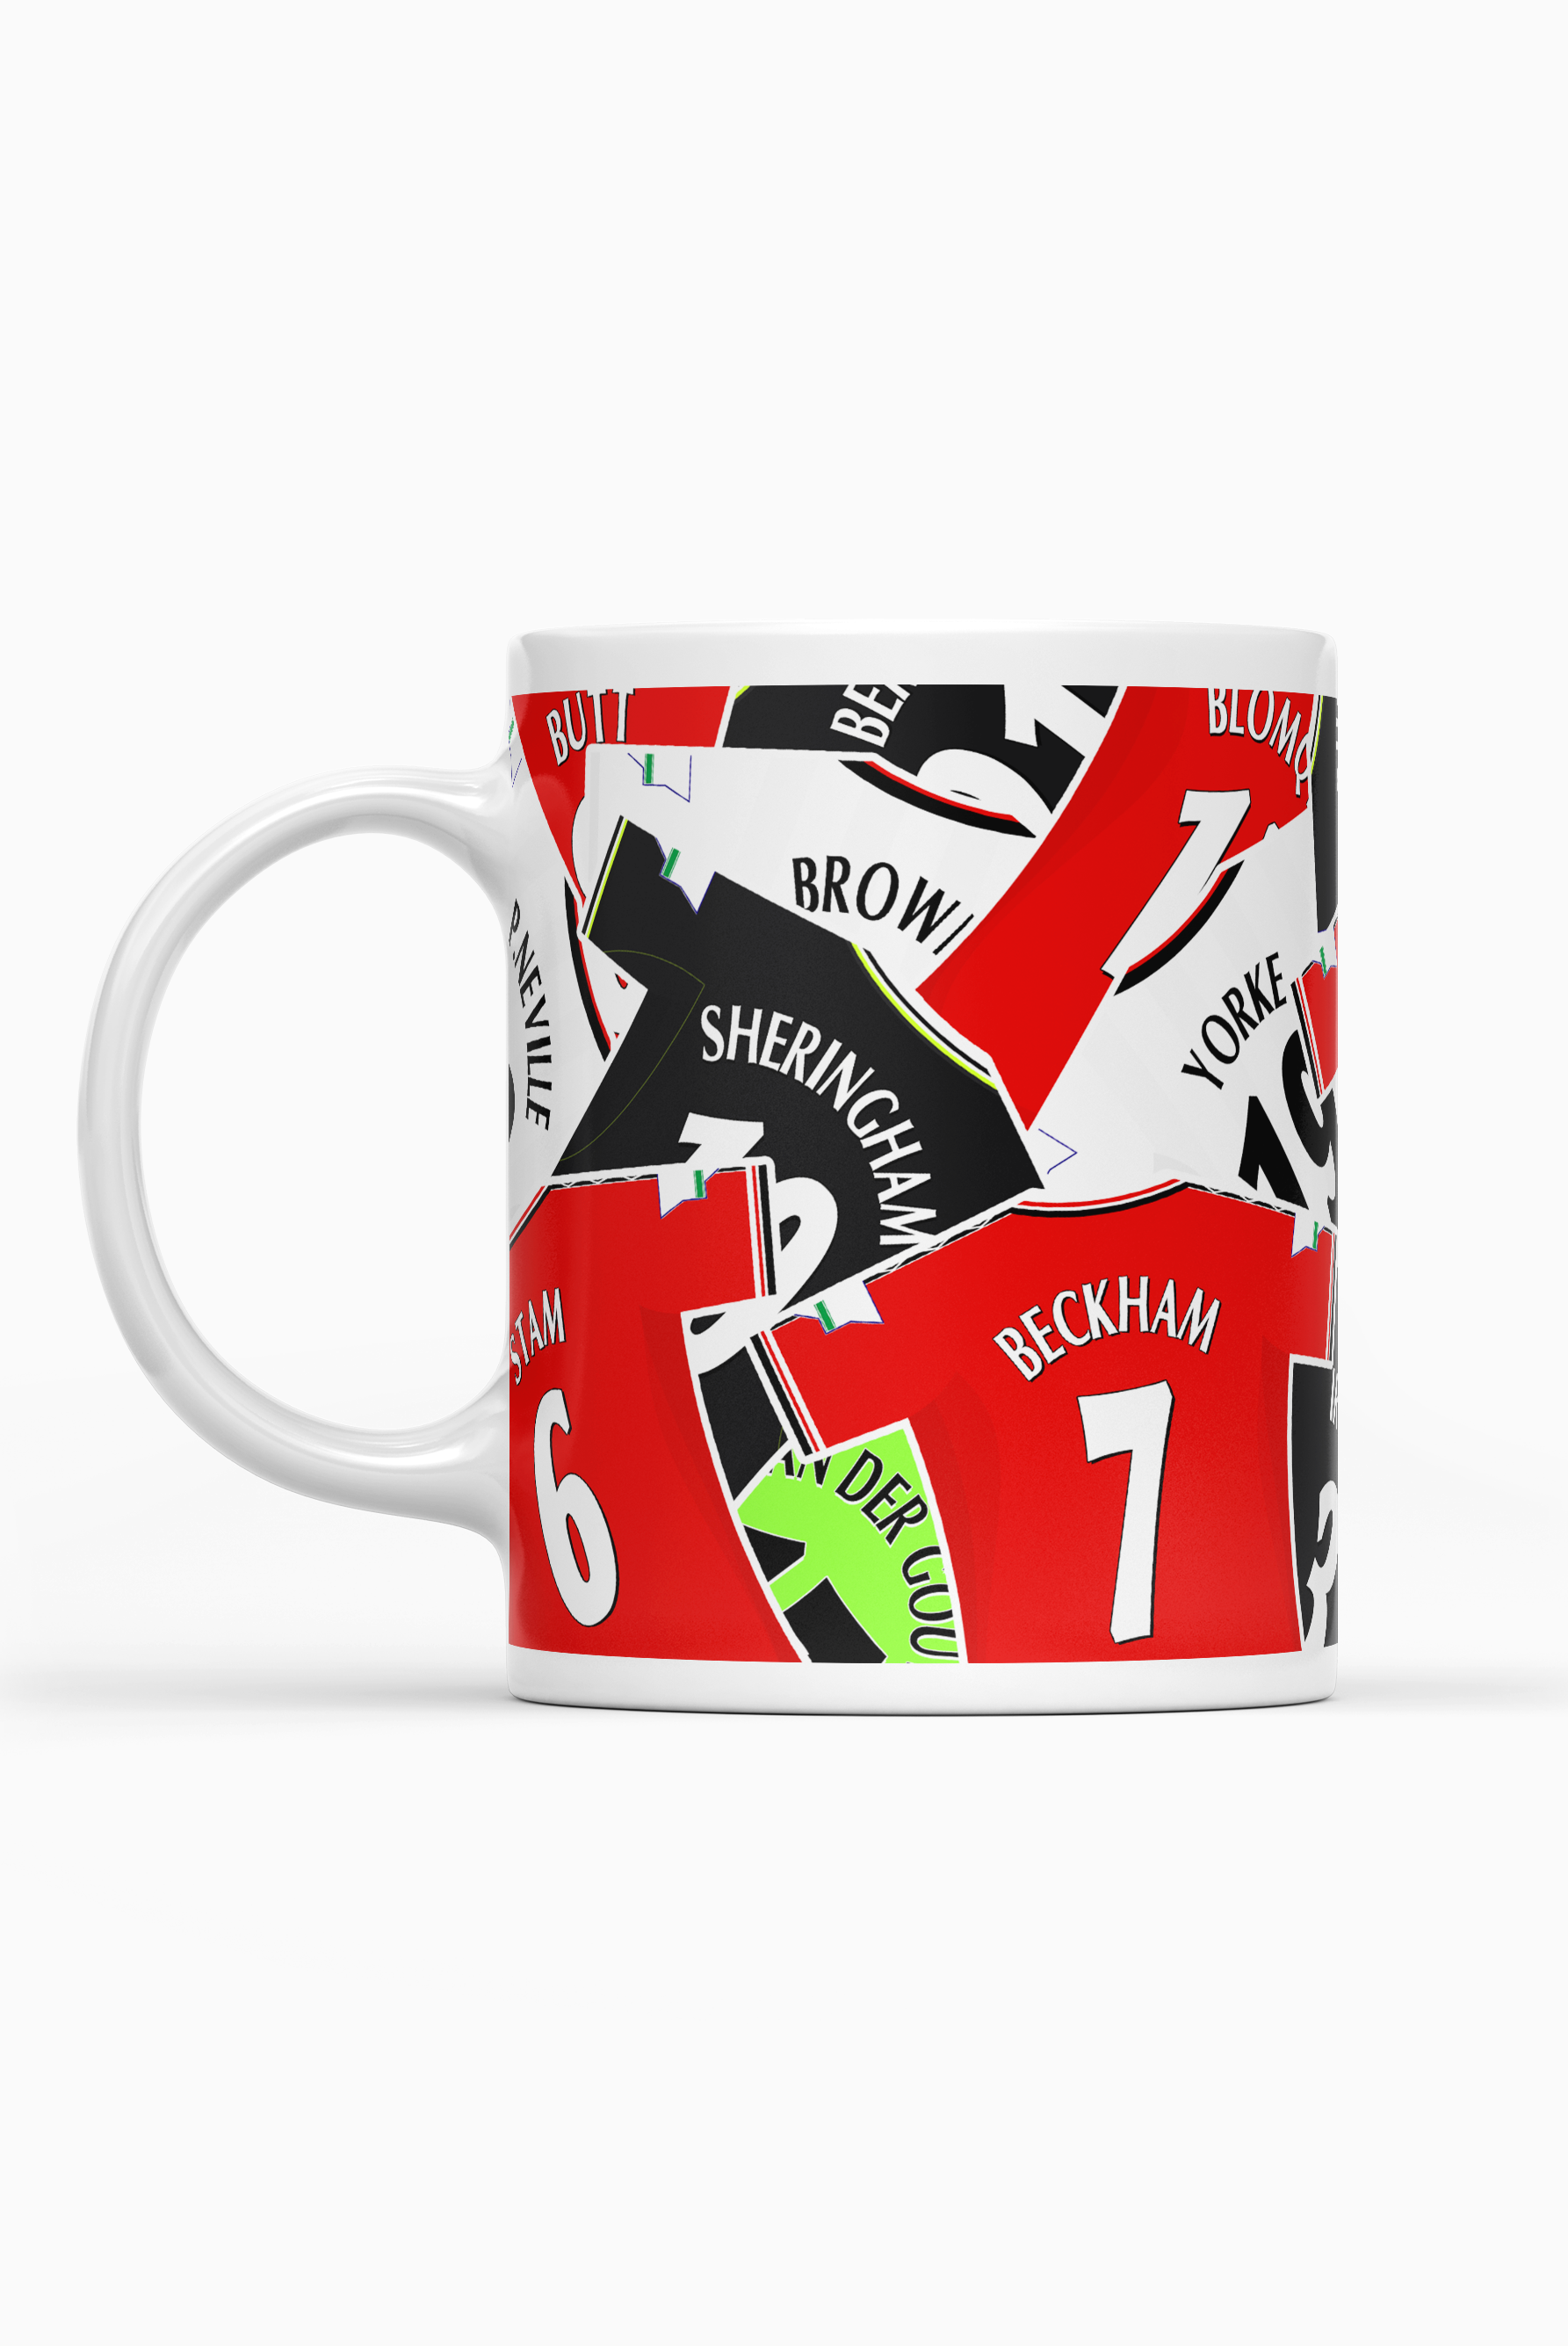 Man United / 1998-99 Squad Mug